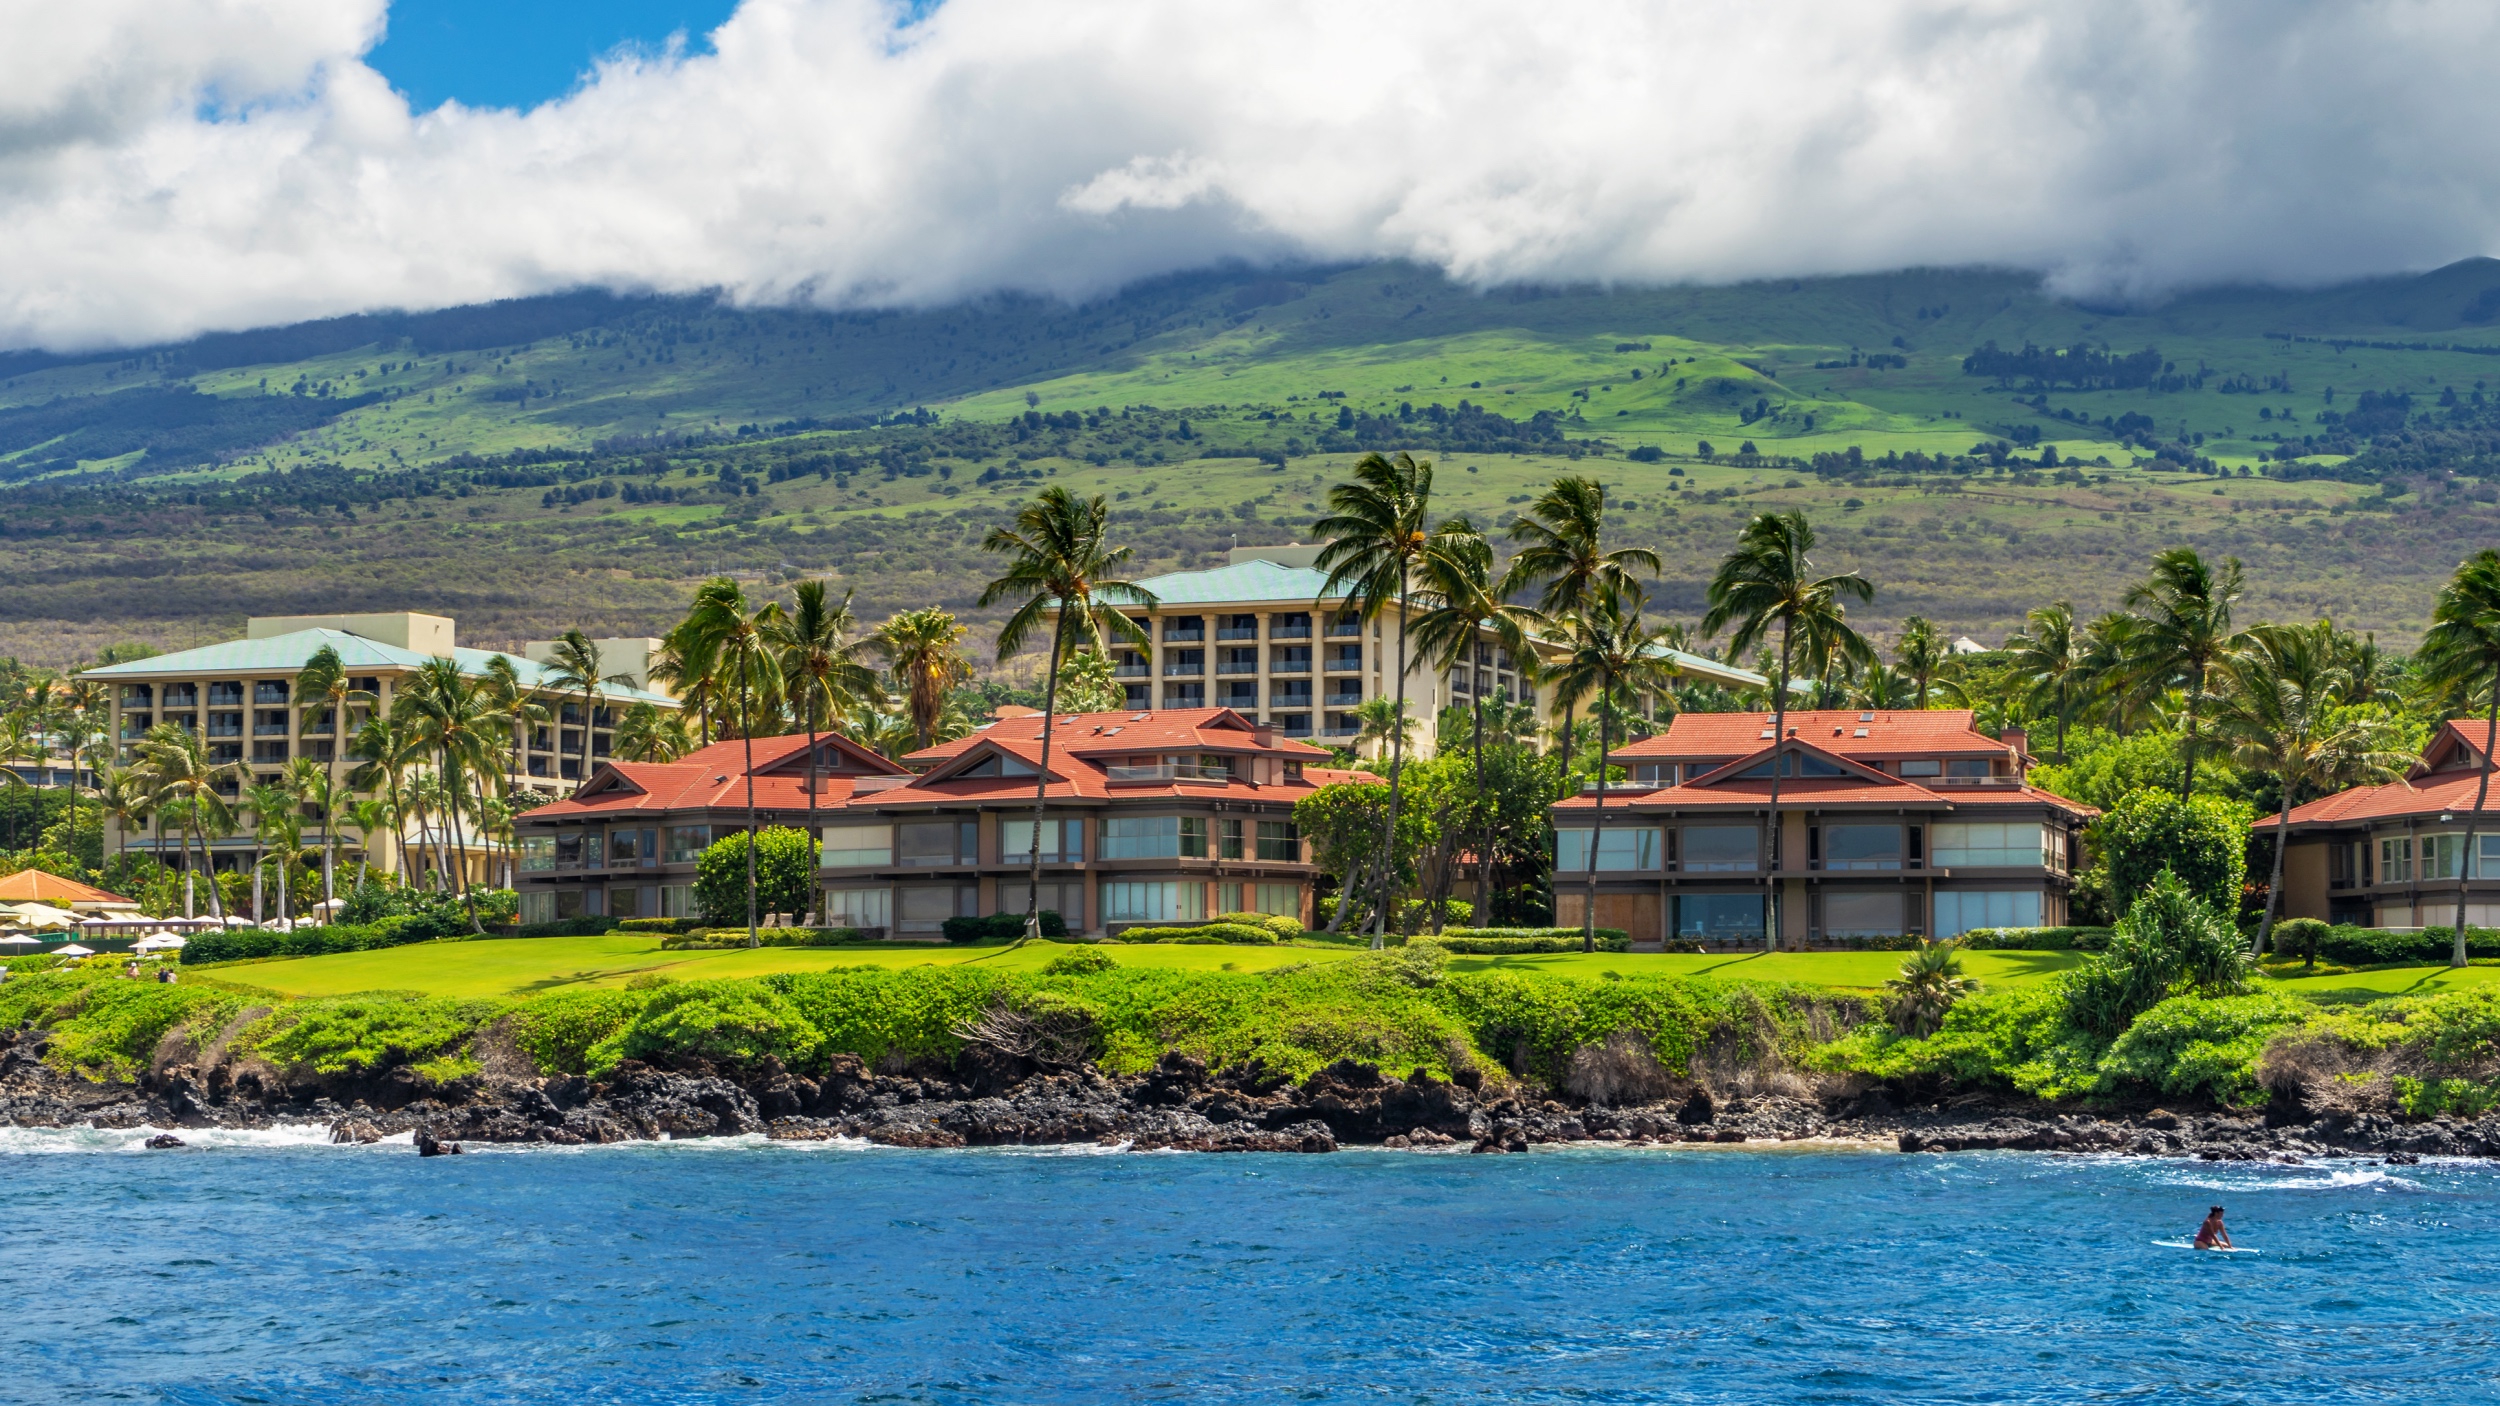 White Lotus style resort in Hawaii